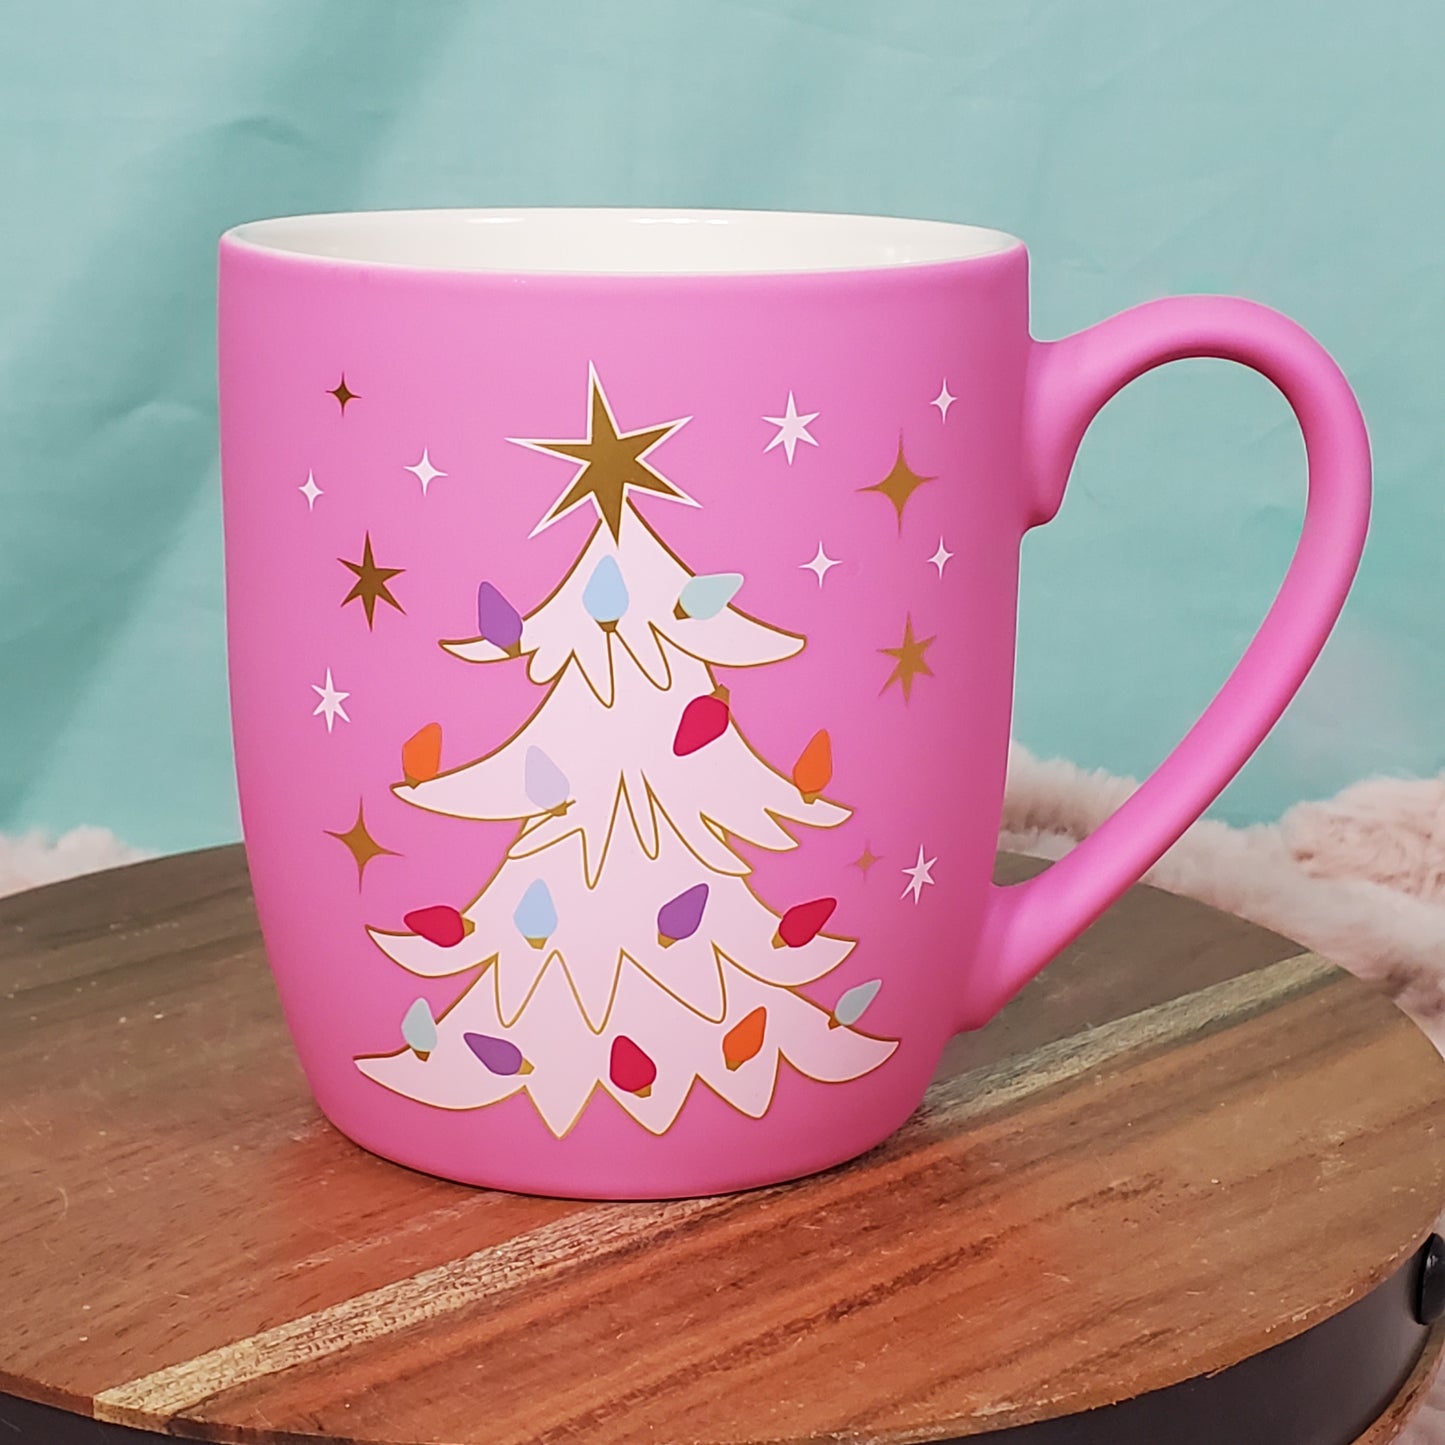 Peppermint and Pine Hot Pink Christmas Tree Mug - Festive Holiday Drinkware